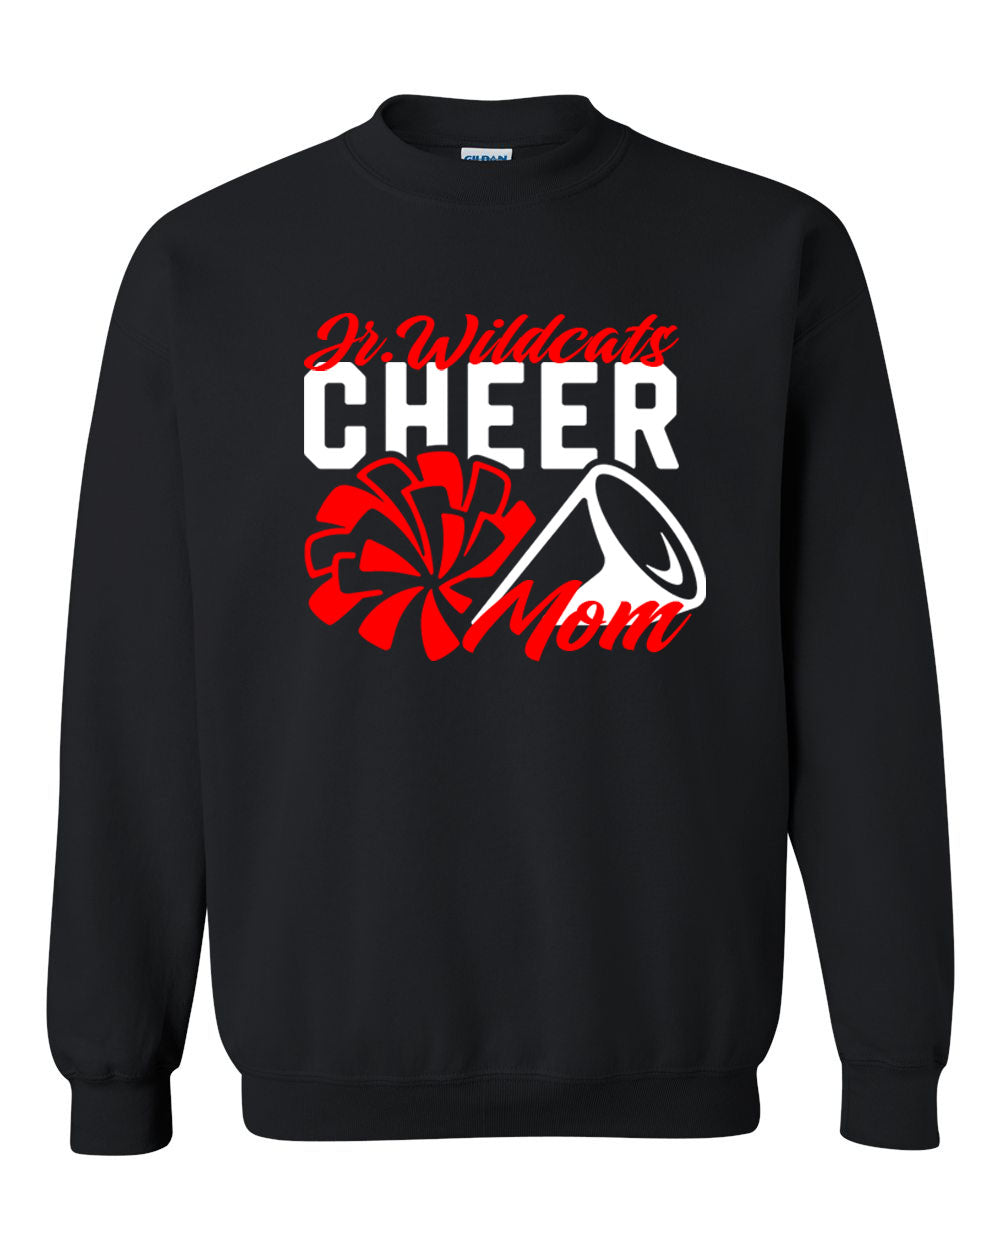 High Point Cheer Design 4 non hooded sweatshirt